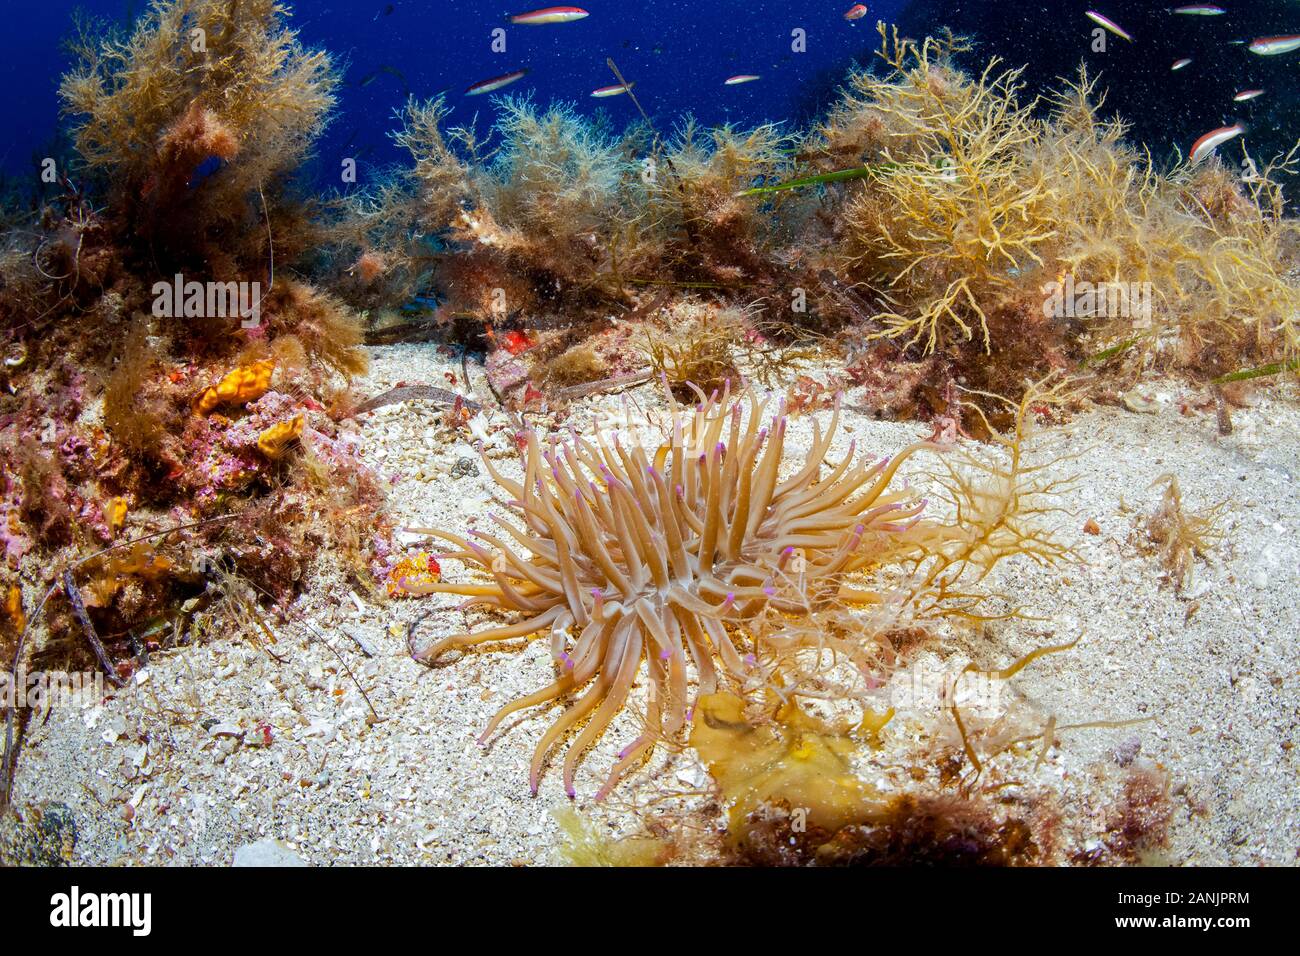 Golden Anemone, Condylactis aurantiaca, Ustica Island, Italy, Thyrrenian Sea, Mediterranean Sea, Atlantic Ocean Stock Photo